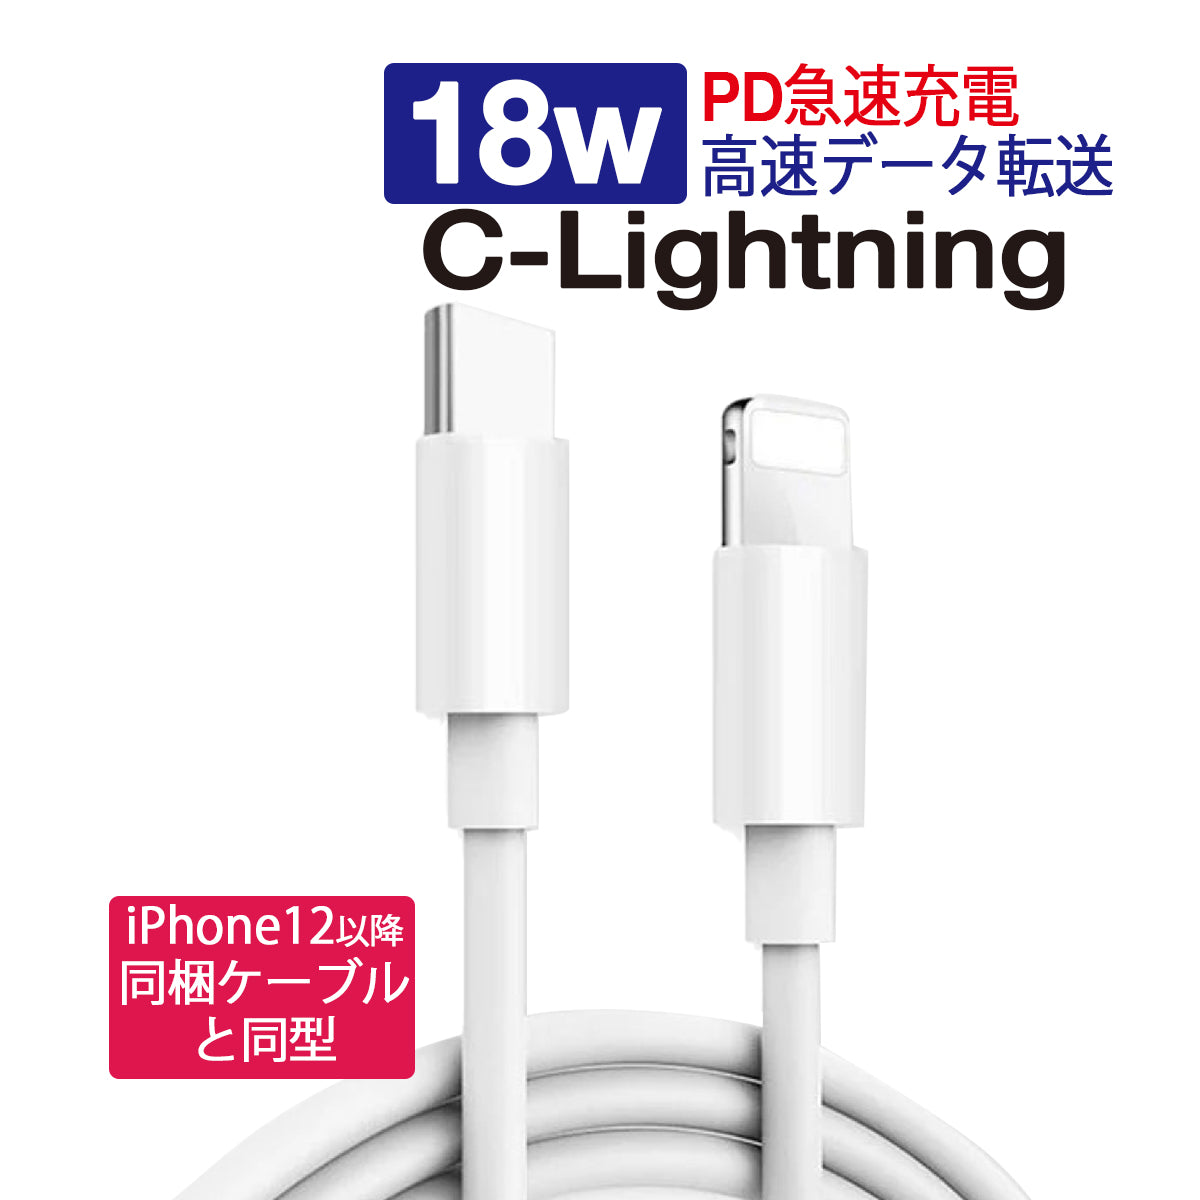 Type C Lightningケーブル PD充電 18W 急速充電 高速データ転送 通信 USB C ライトニング Power Deliverly 1m 白 iPhone iPad など対応 1ヶ月保証